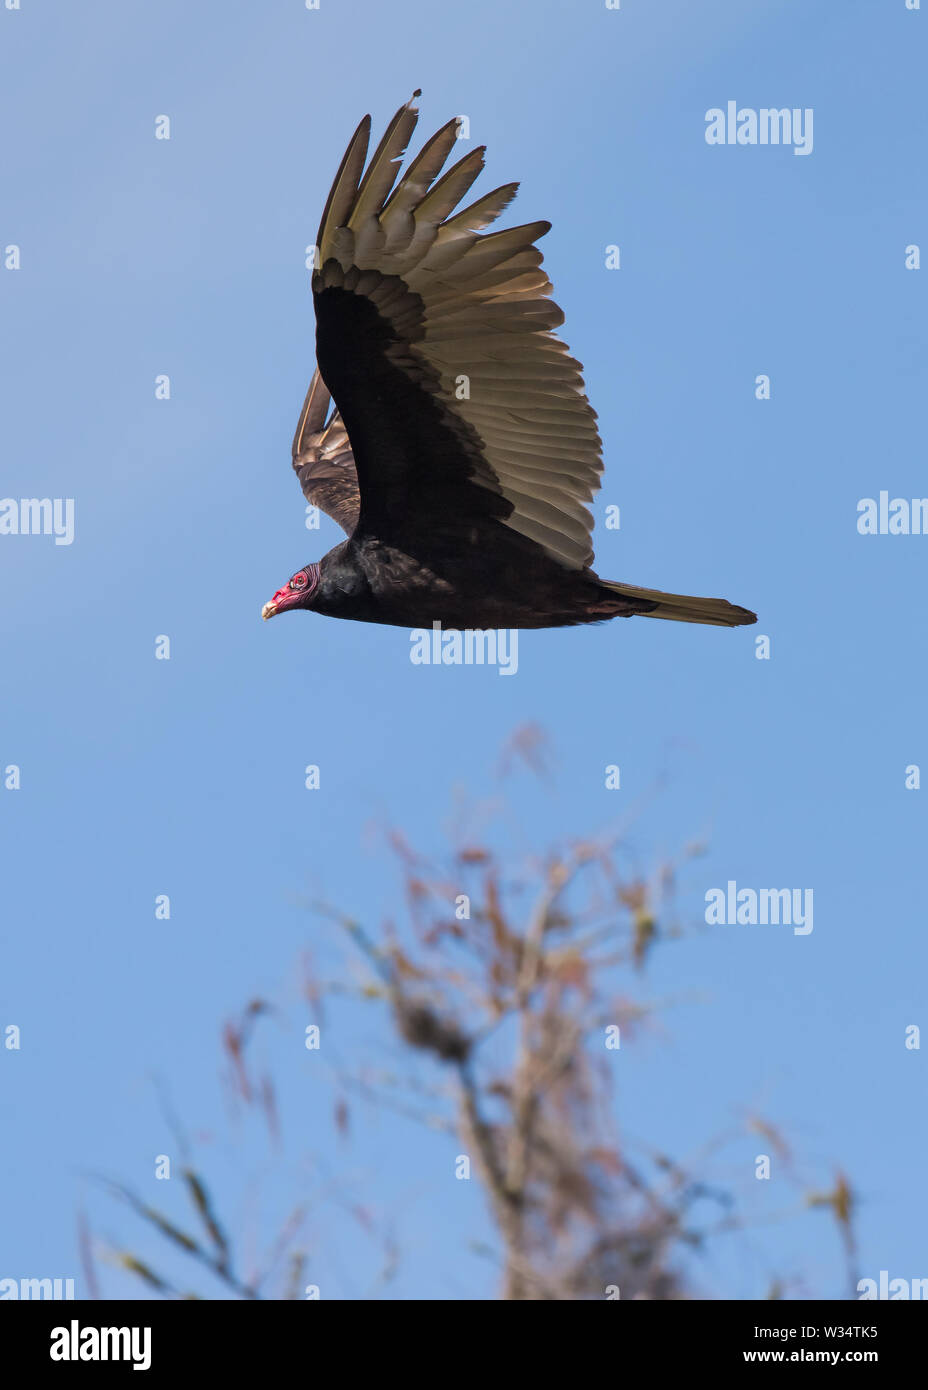 A Turkey Vulture takes flight in Shingle Creek Regional Park near Orlando, Florida. Stock Photo